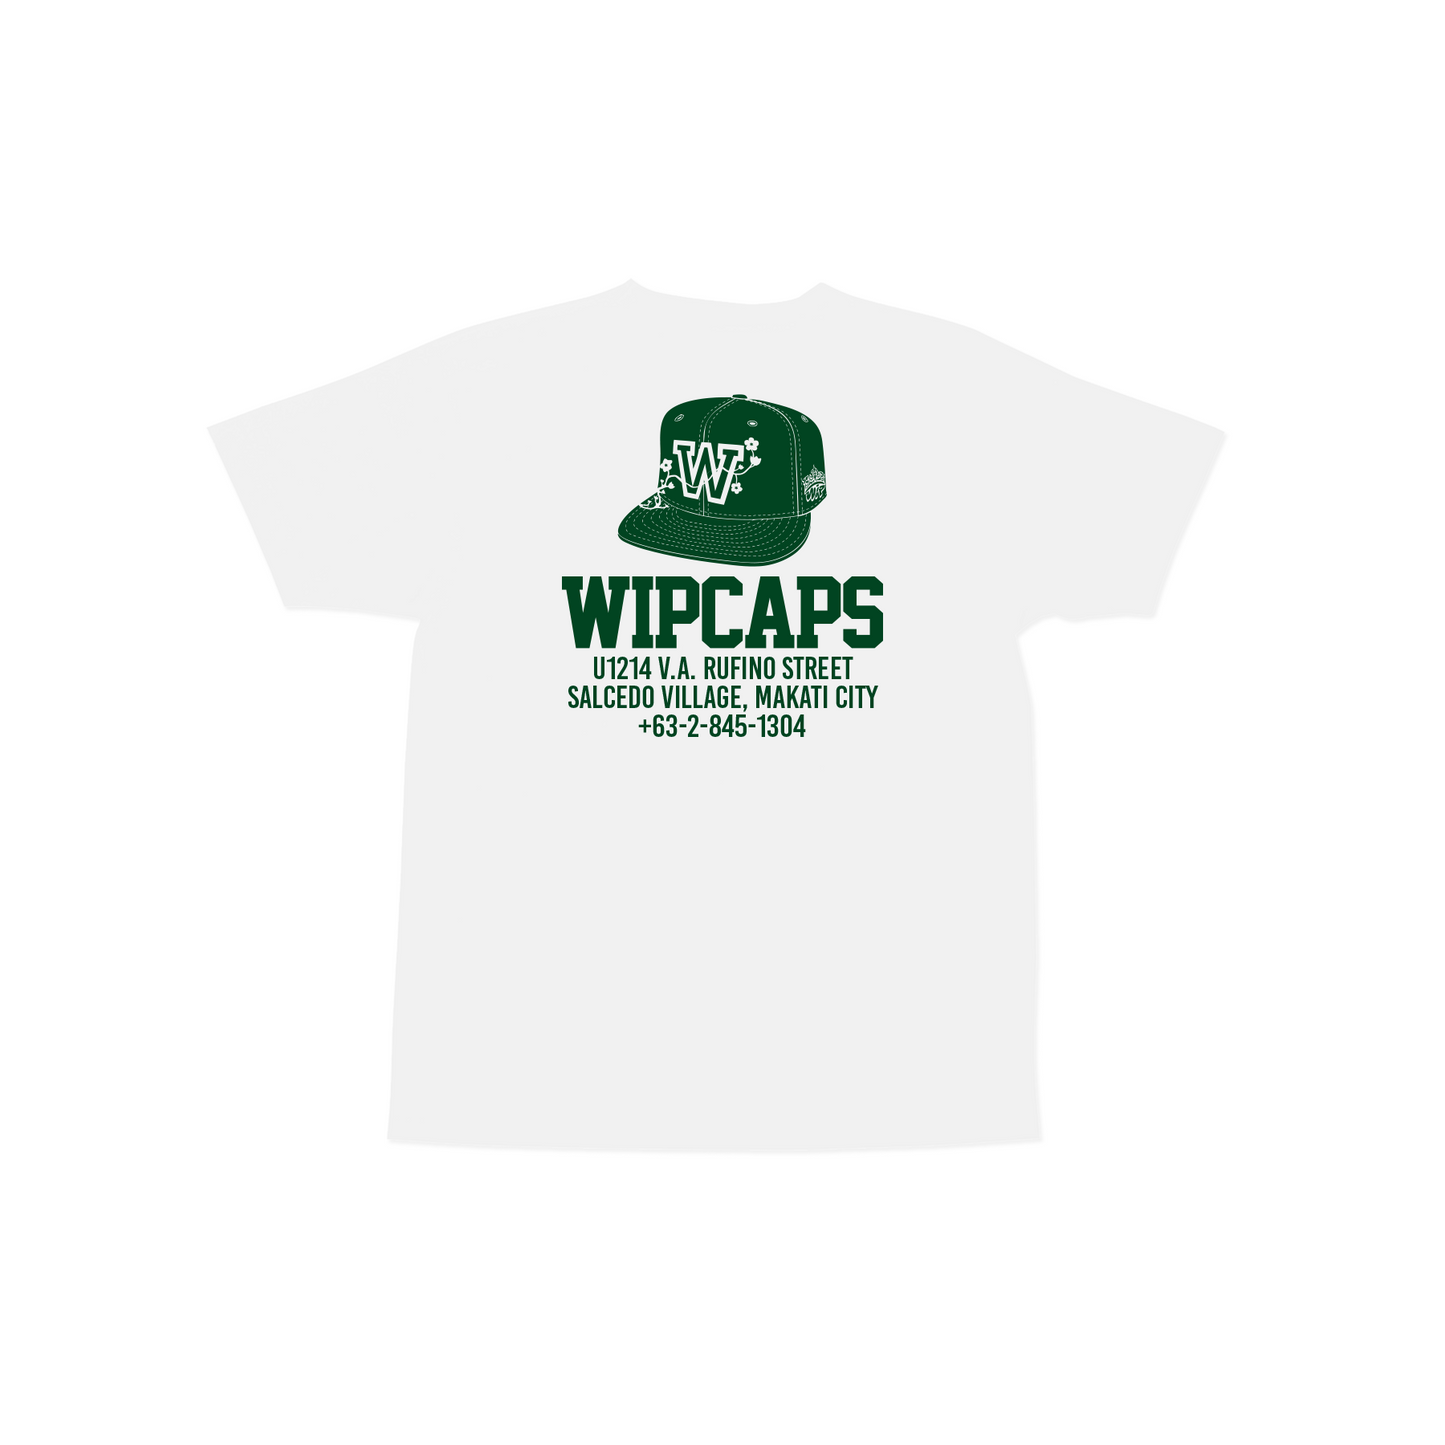 WIPCAPS Tee (White)